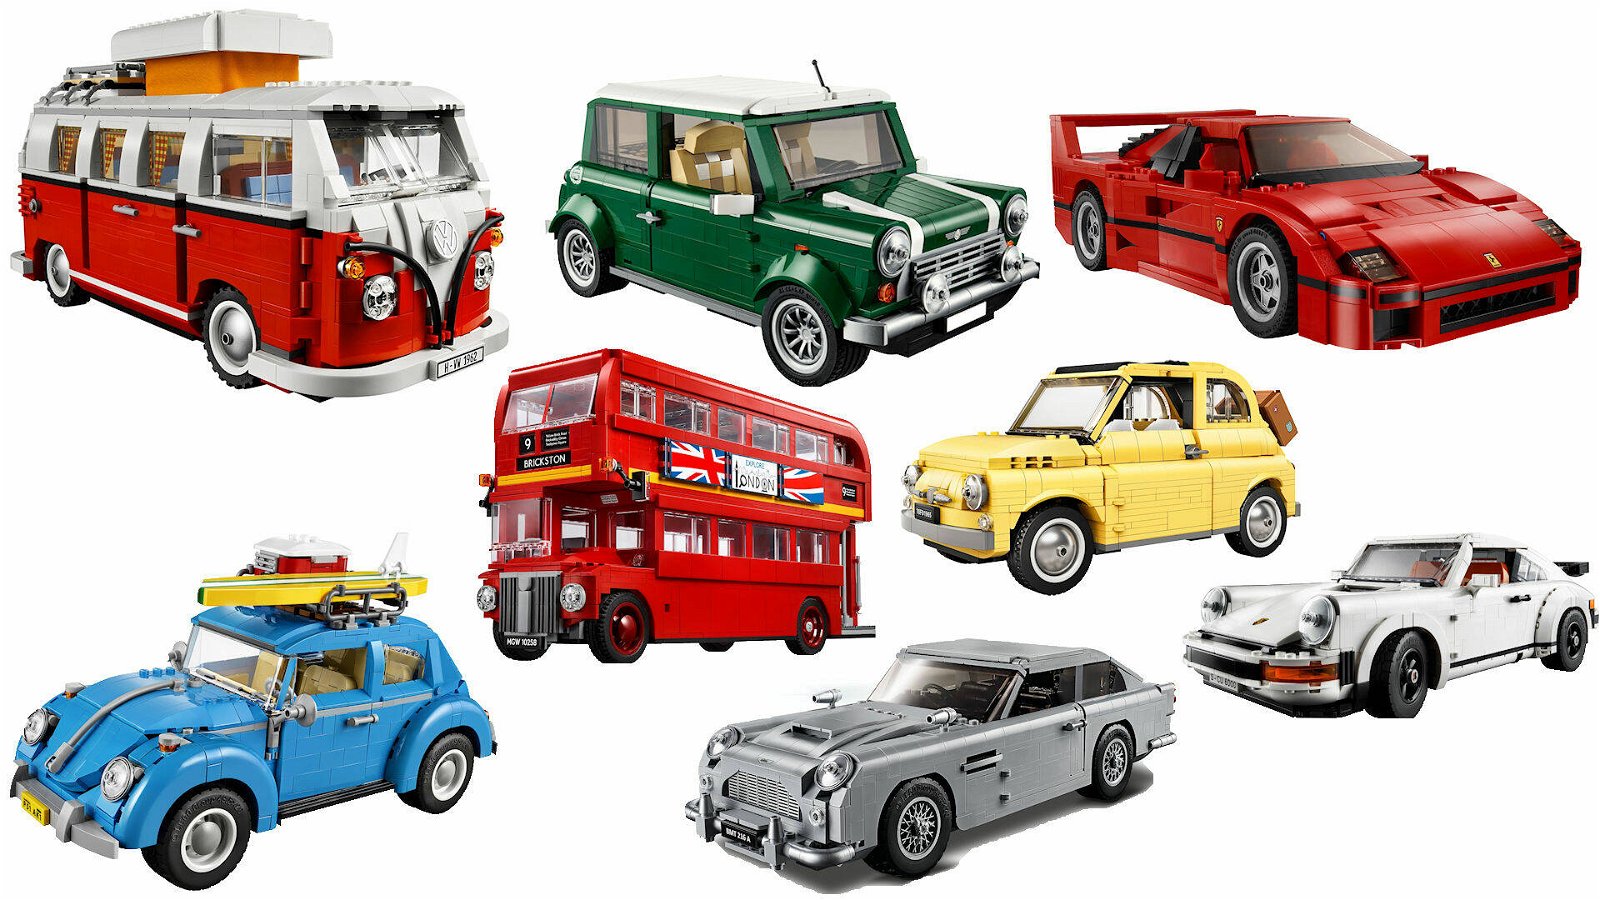 Immagine di LEGO: i migliori set LEGO Creator Expert per costruire modelli alternativi